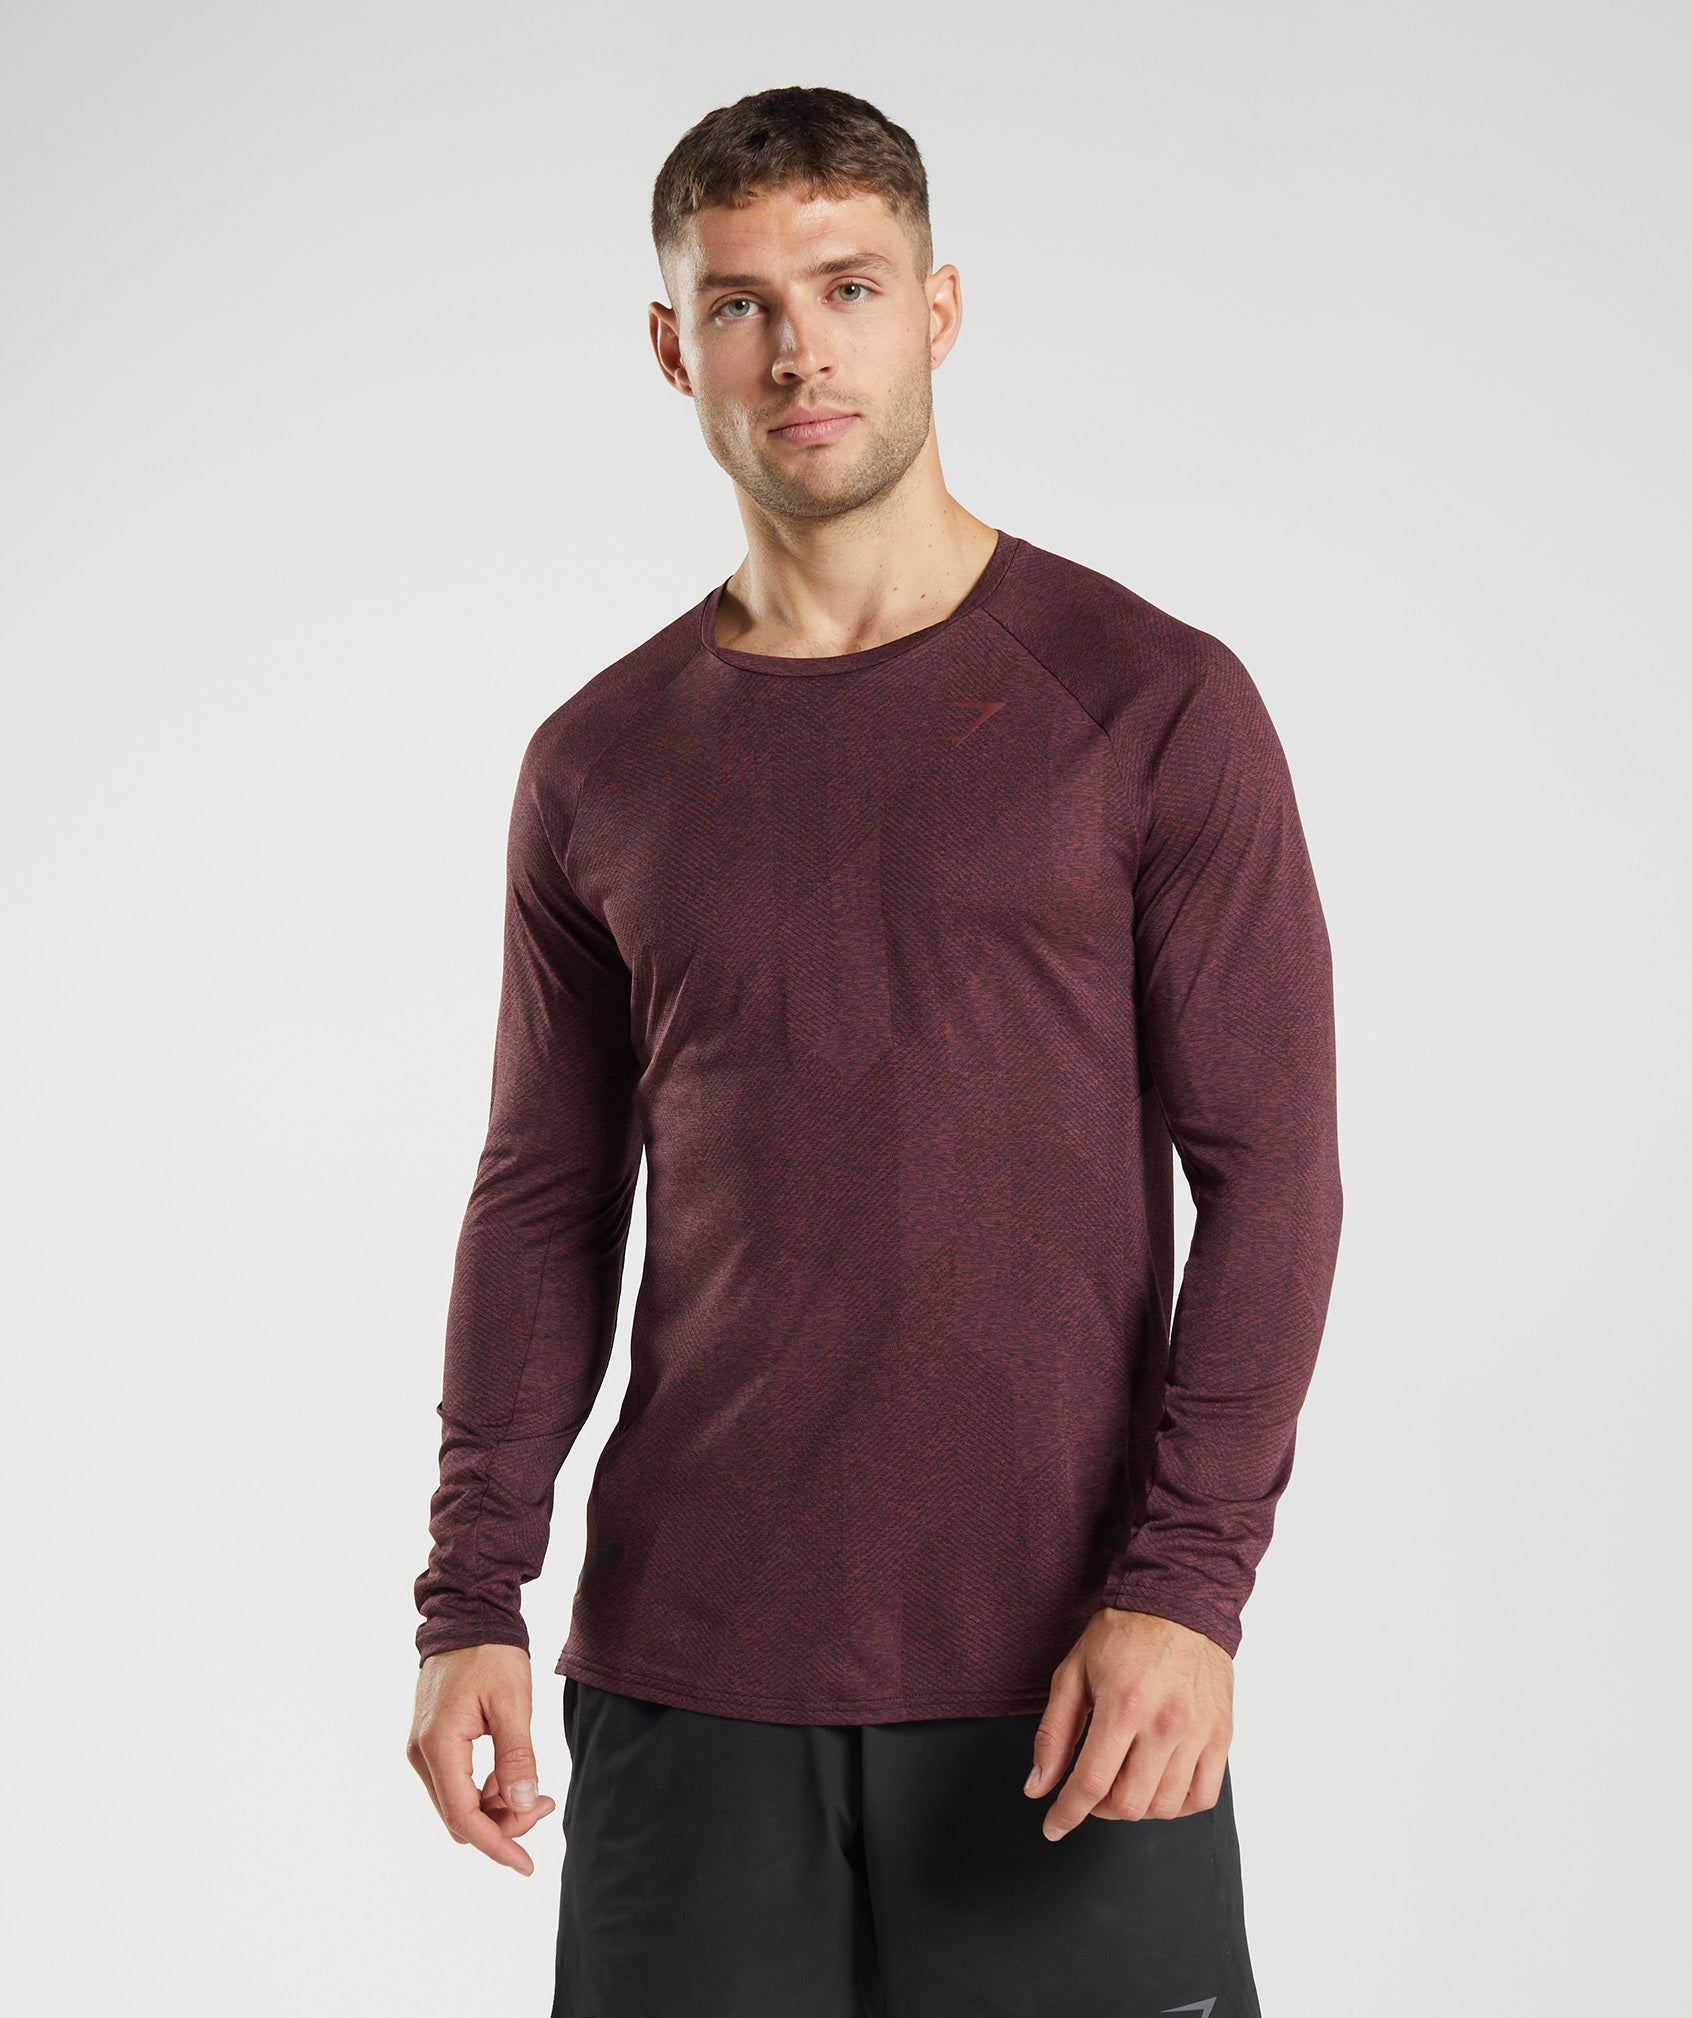 Gymshark Apex Long Sleeve T-Shirt - Cherry Brown | Gymshark